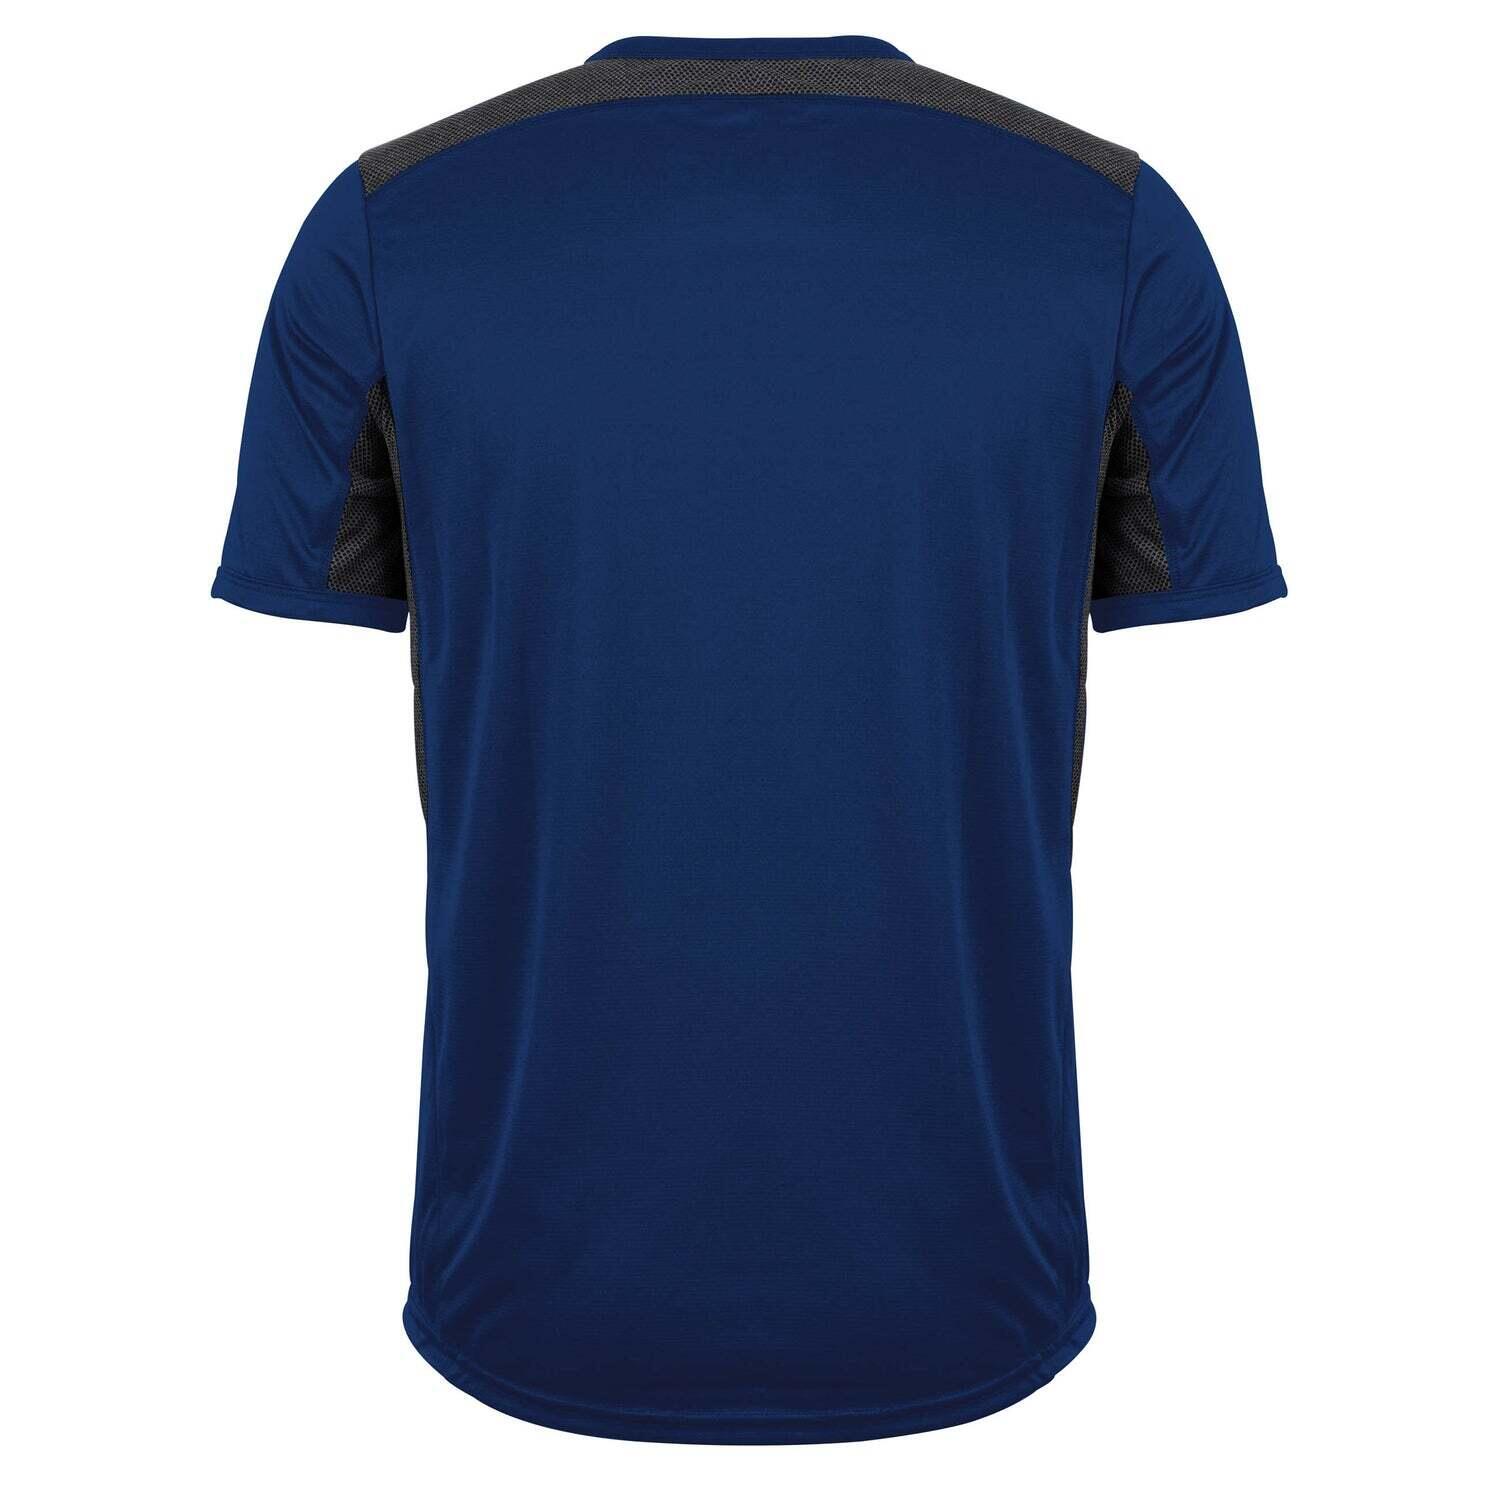 Pro Performance Short Sleeve Men's T-Shirt,  Navy 2/2